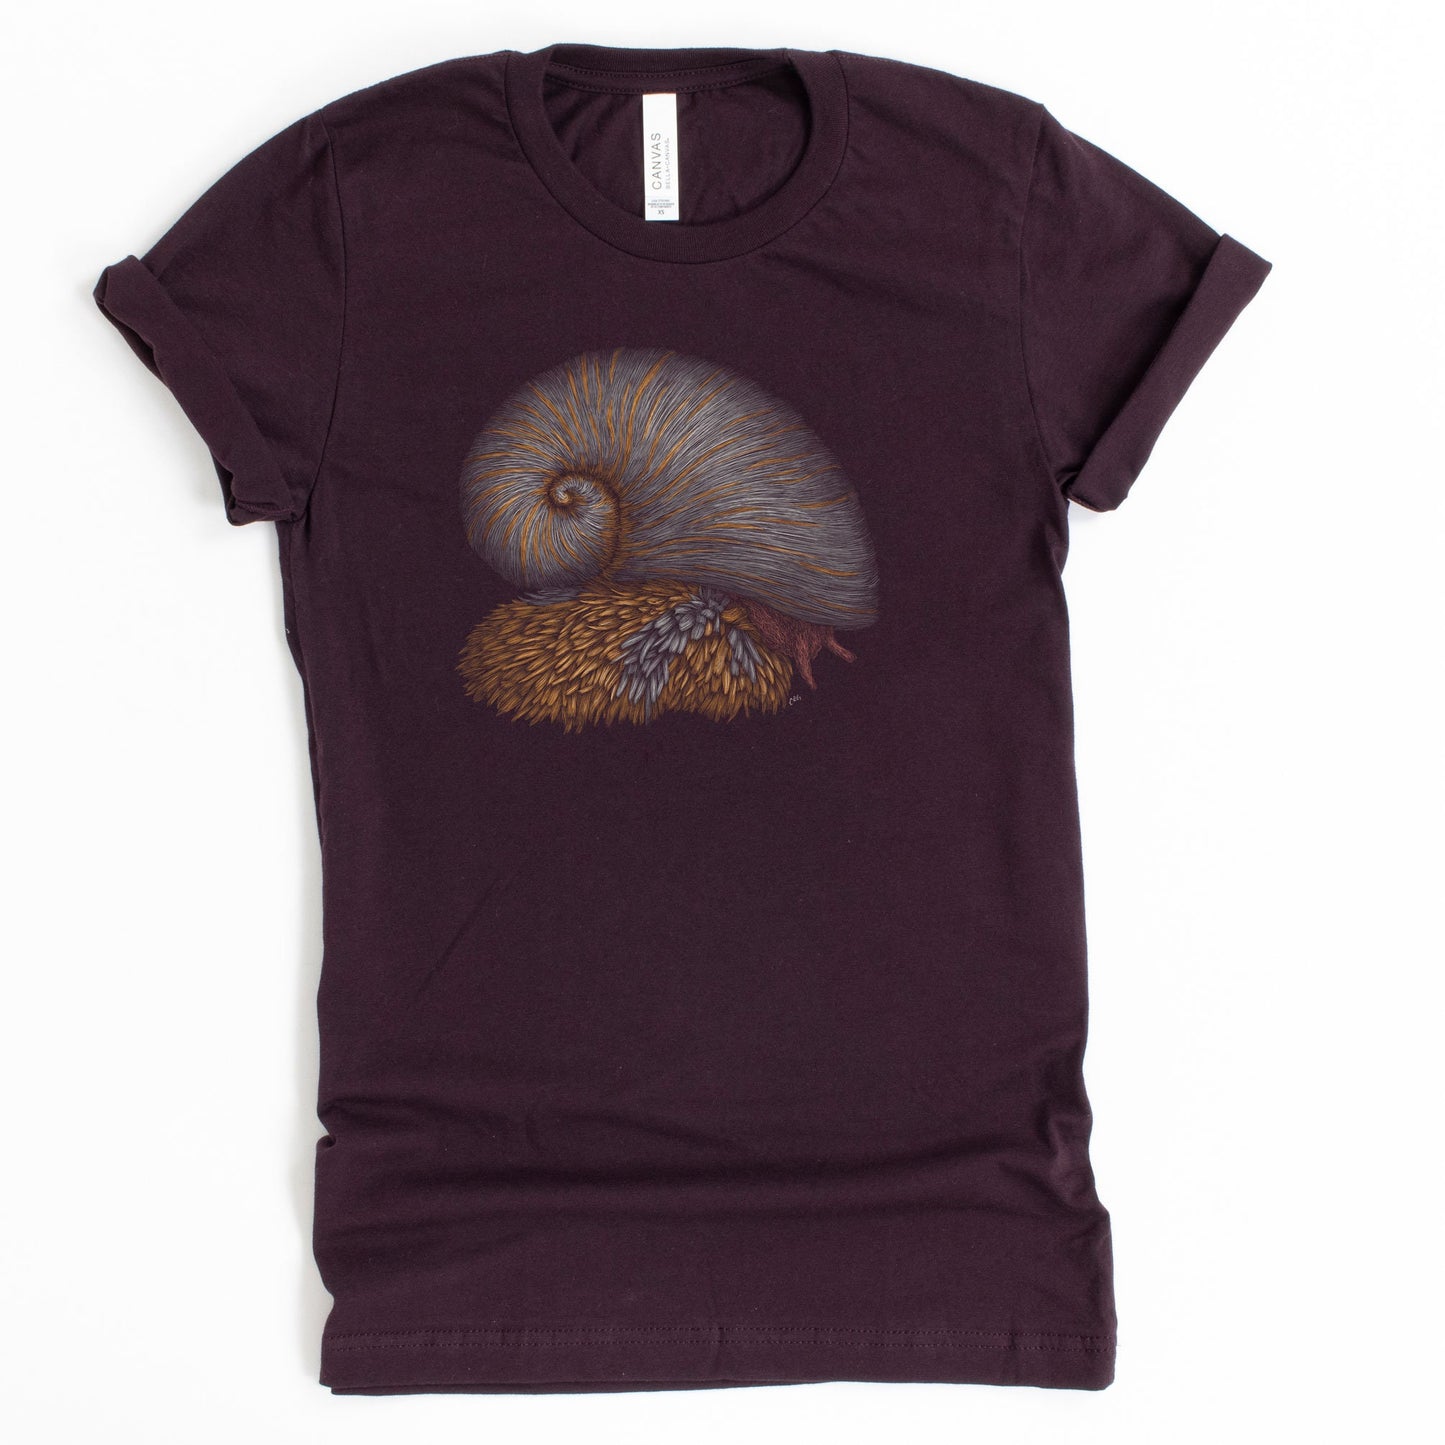 Volcano Snail Shirt